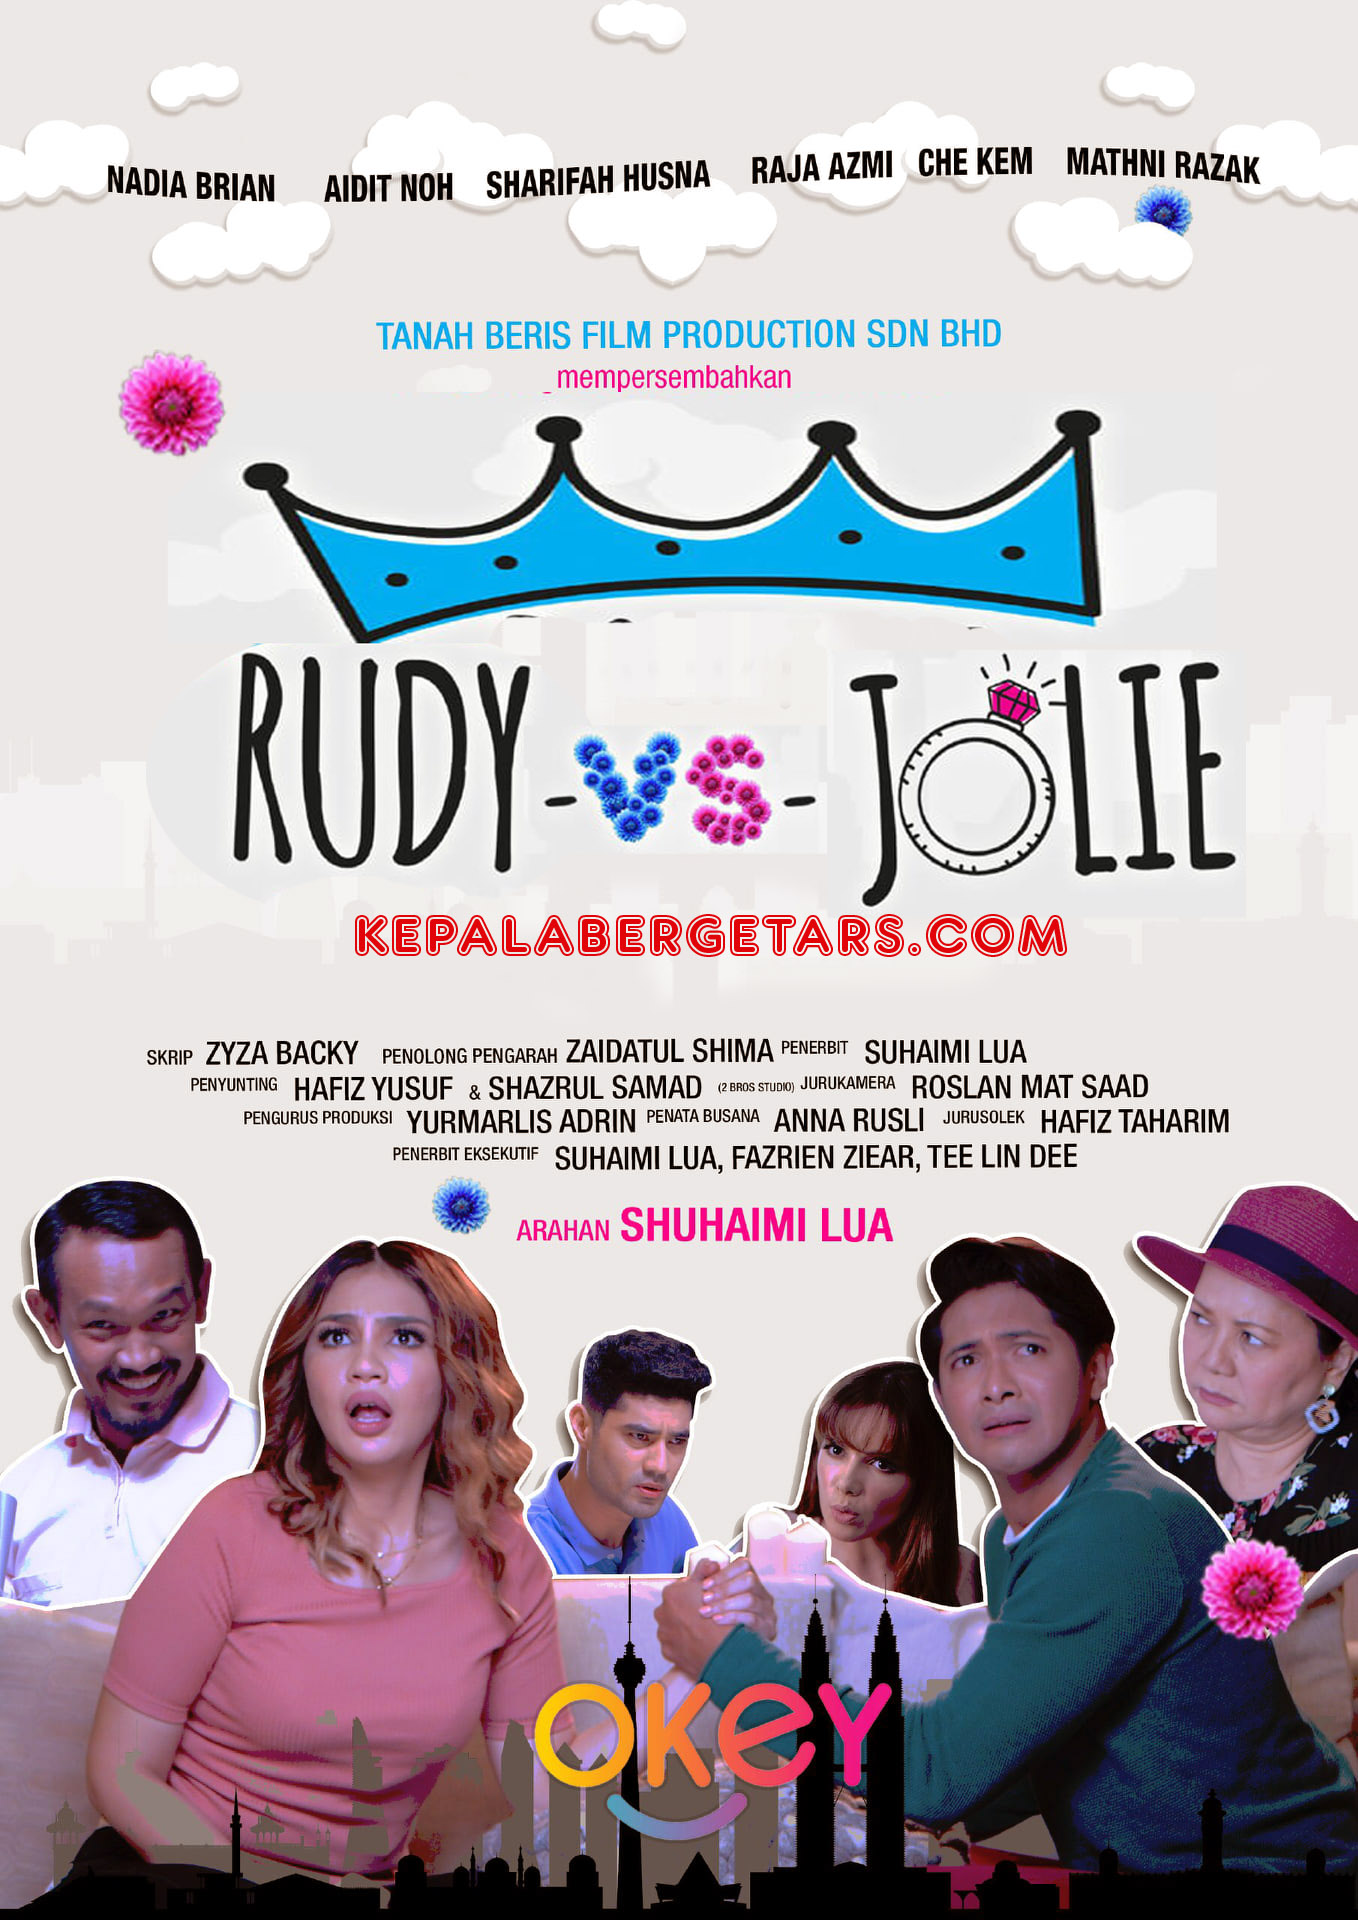 Rudy vs Jolie TV Okey